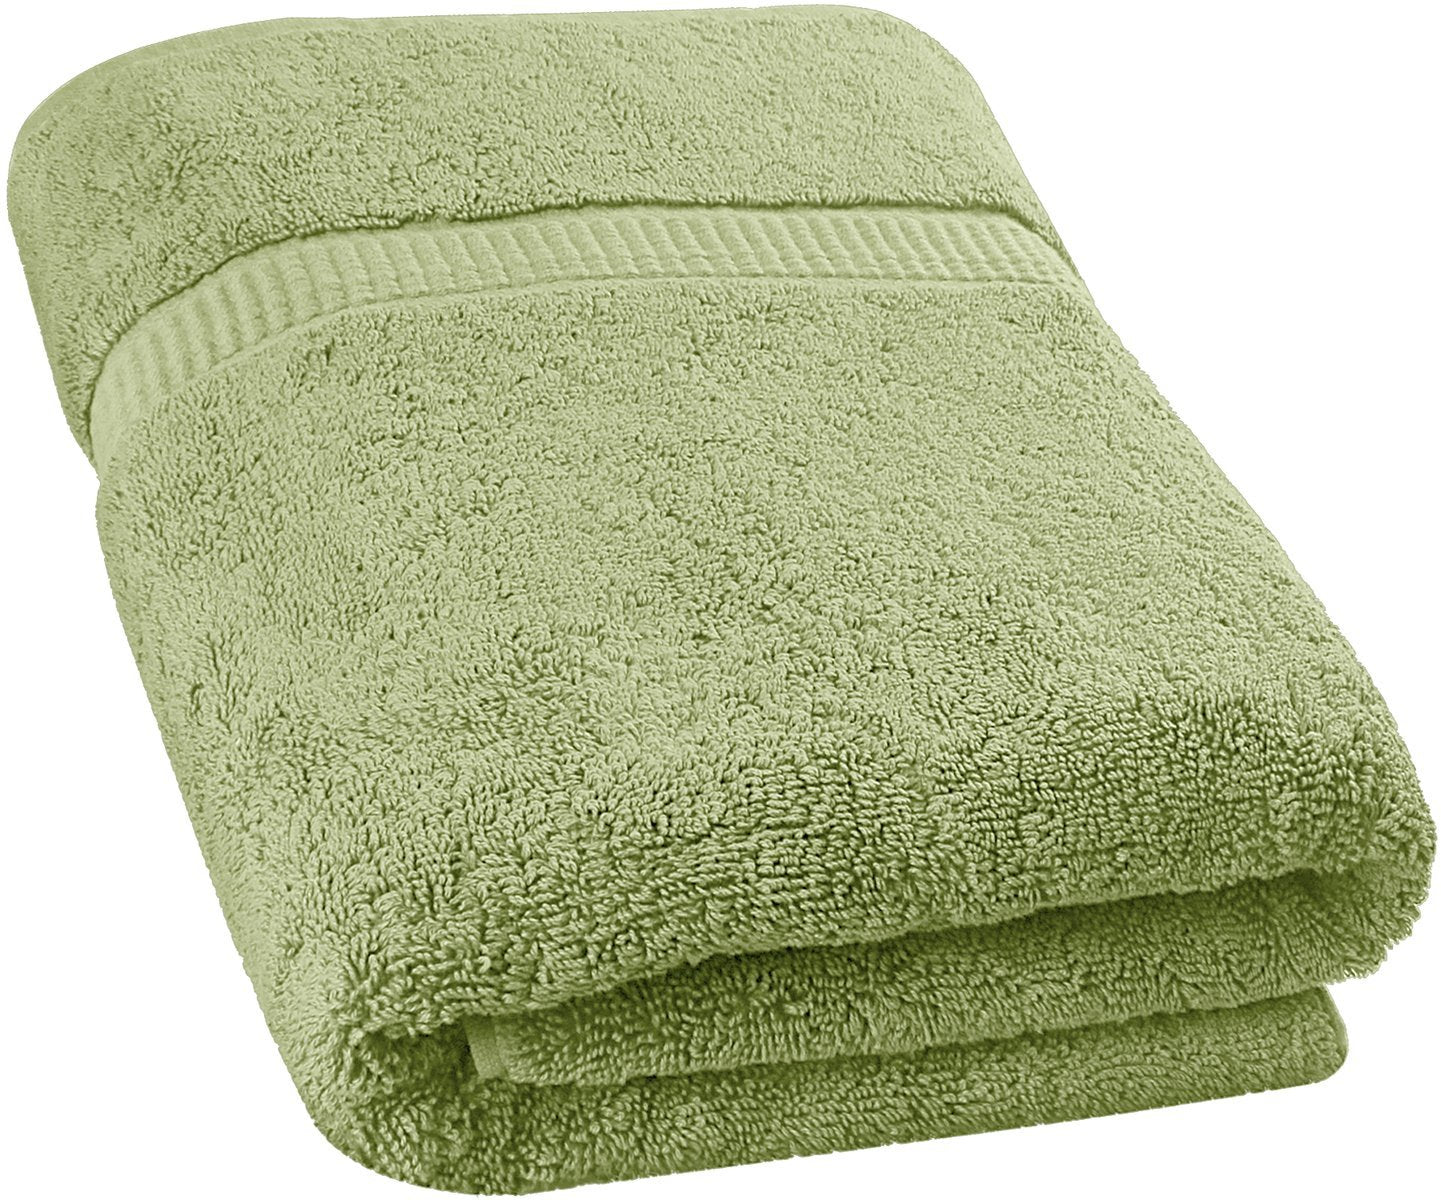 Utopia Towels Extra Large Bath Towel(35 x 70 Inches) - Luxury Bath Sheet - Dark Grey